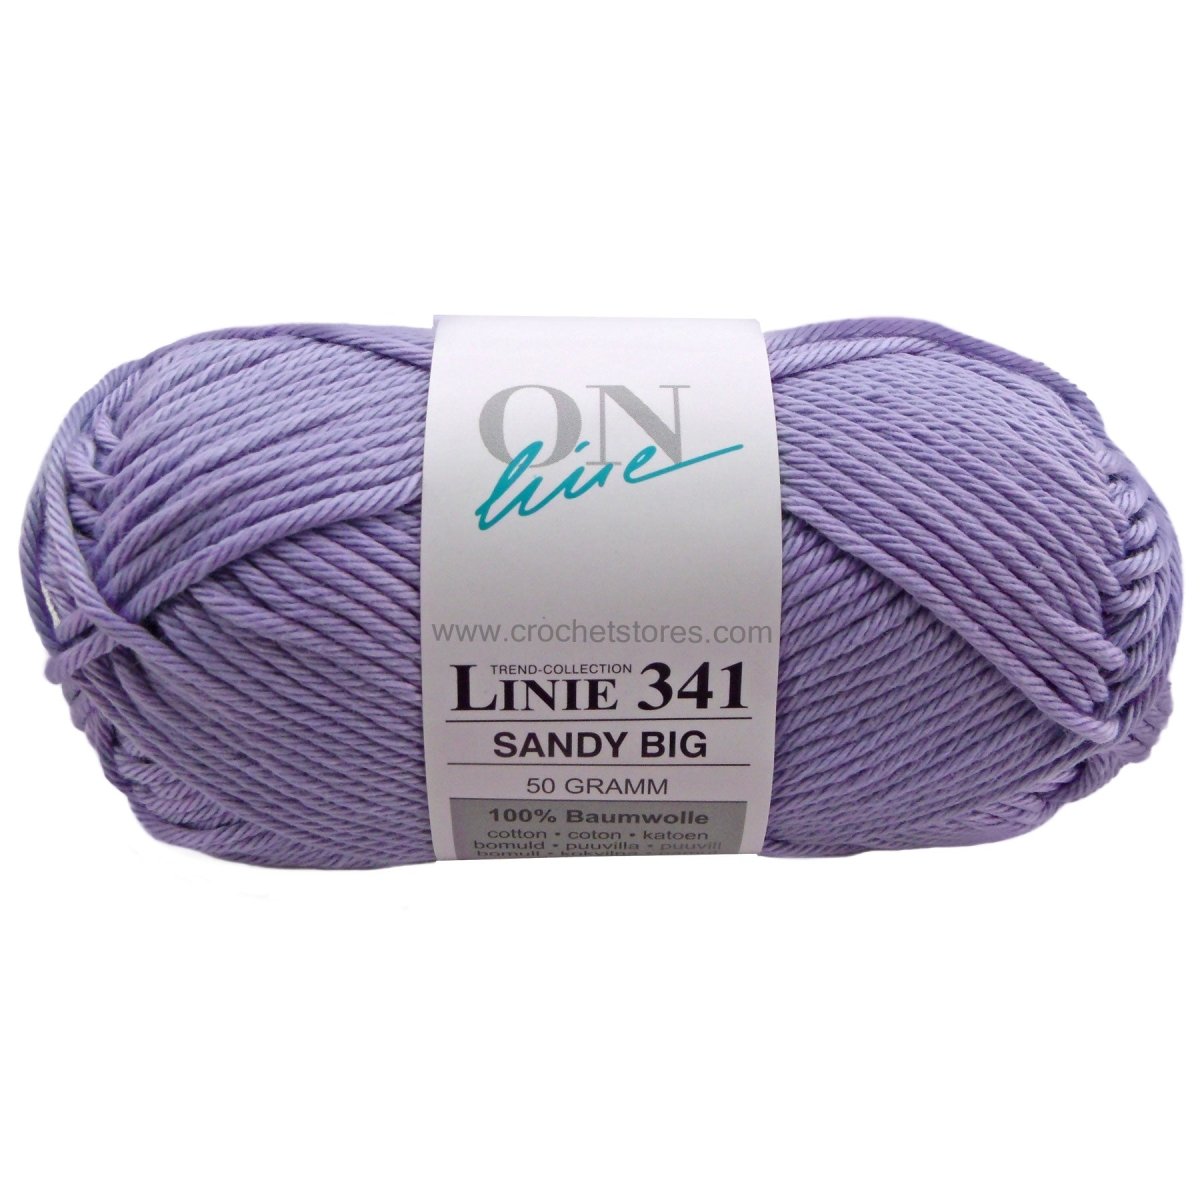 SANDY BIG - Crochetstores110341-0244014366153788